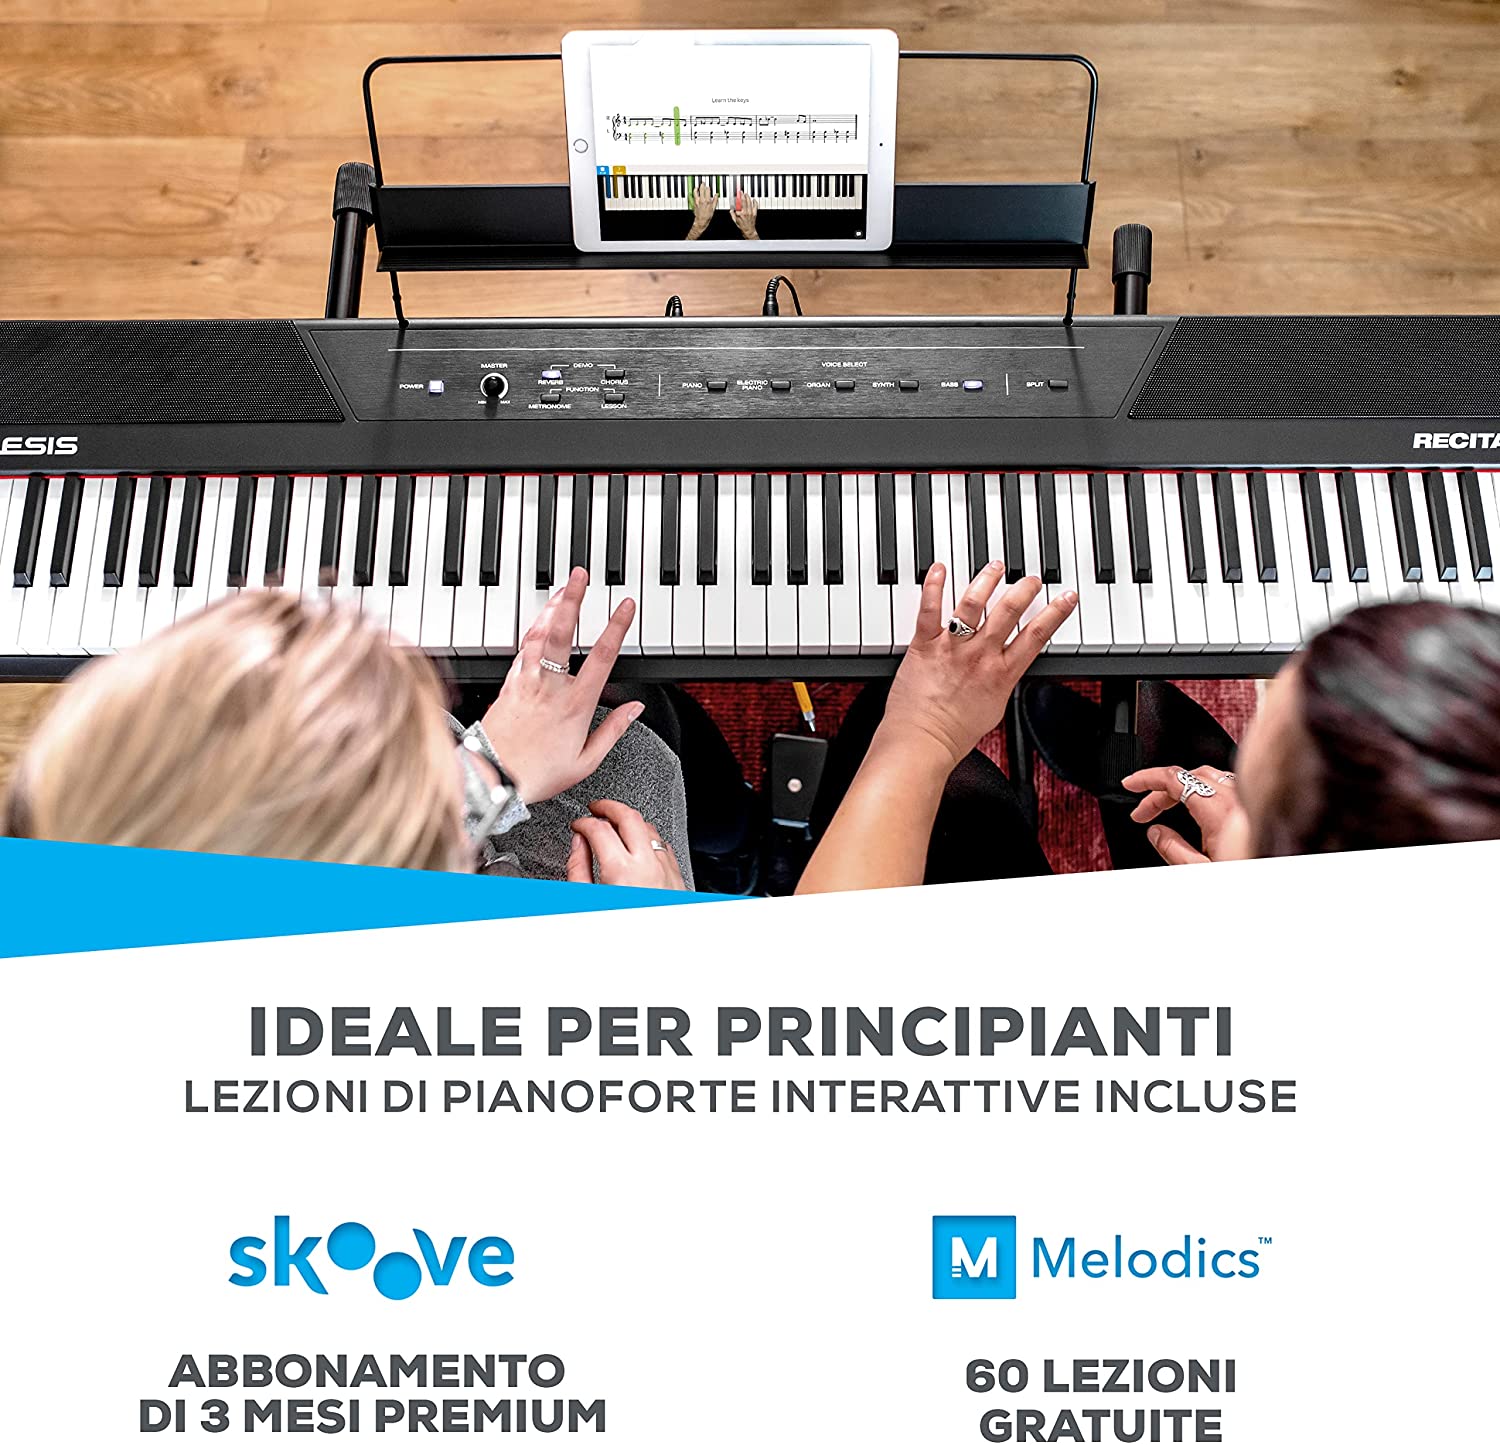 Alesis Recital - Pianoforte/Pianola con Casse Integrate